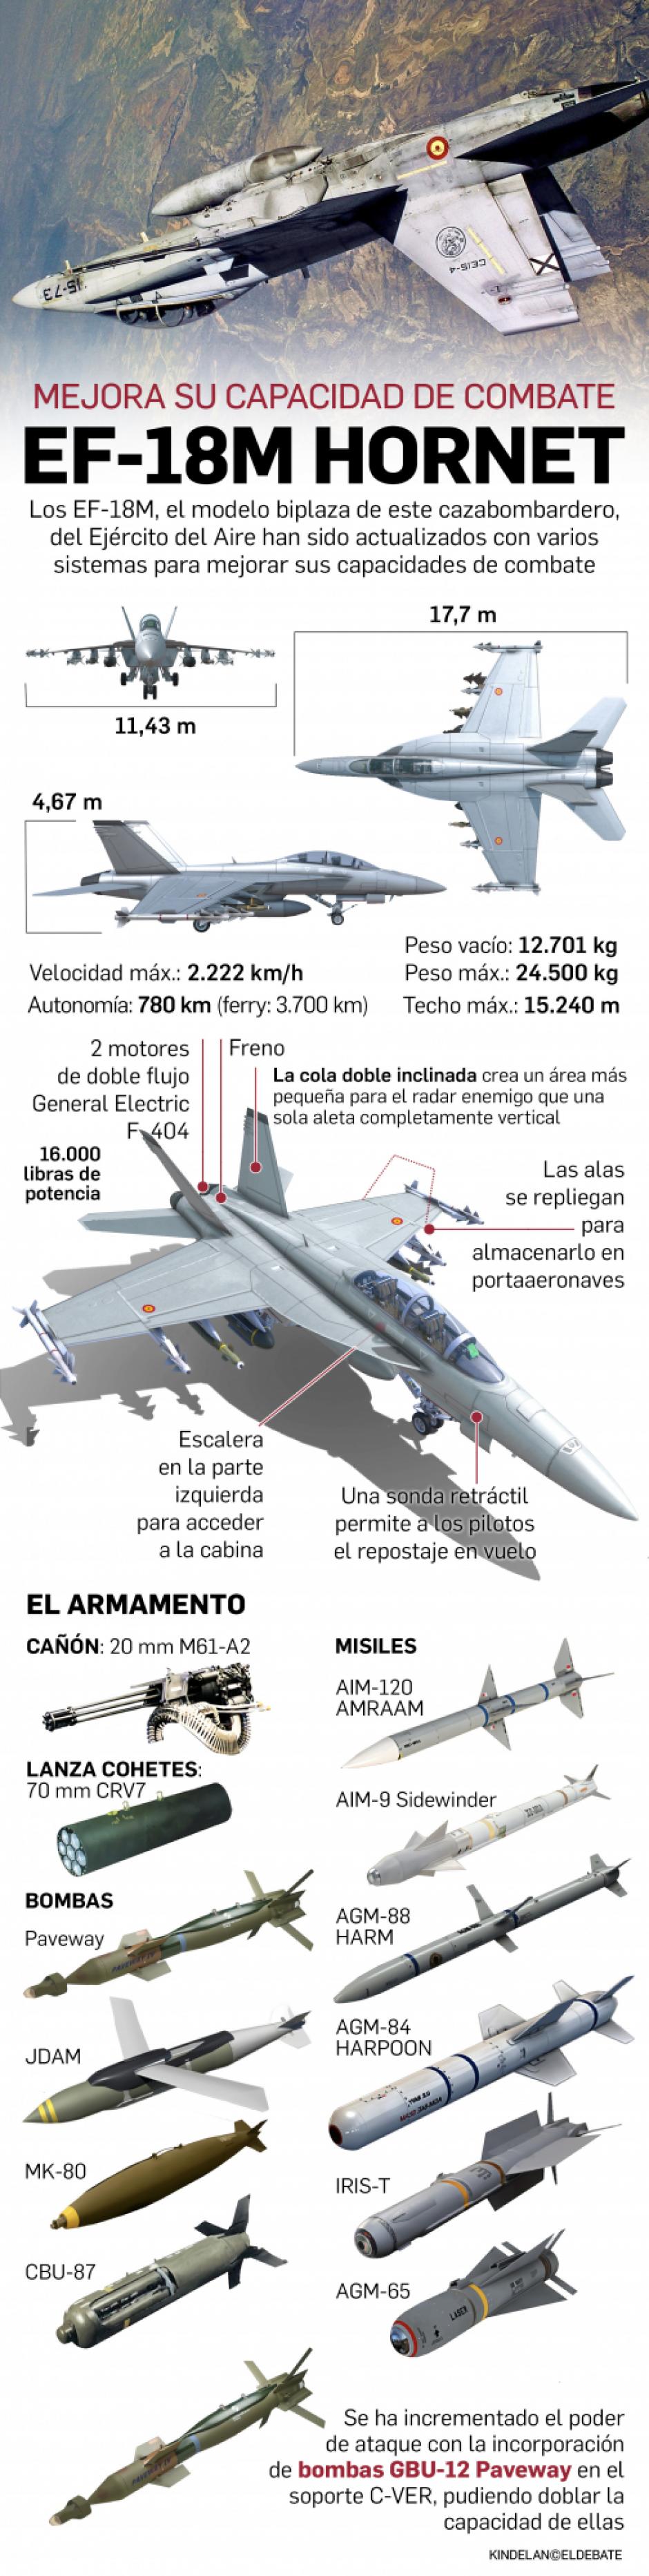 El EF-18M Hornet